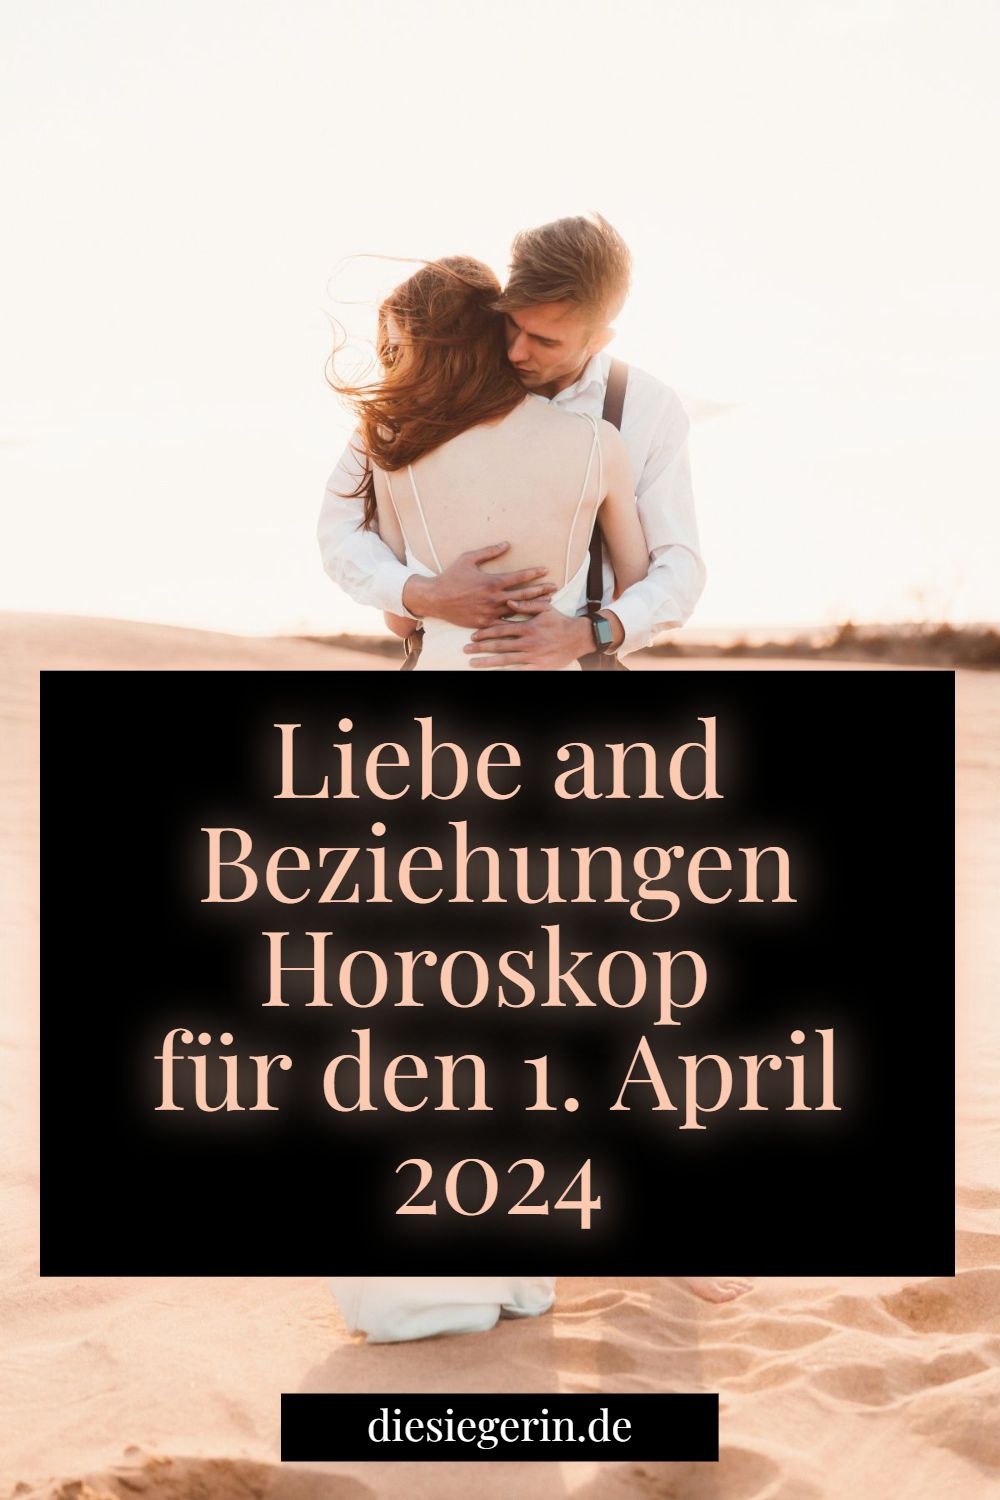 Liebe and Beziehungen Horoskop für den 1. April 2024